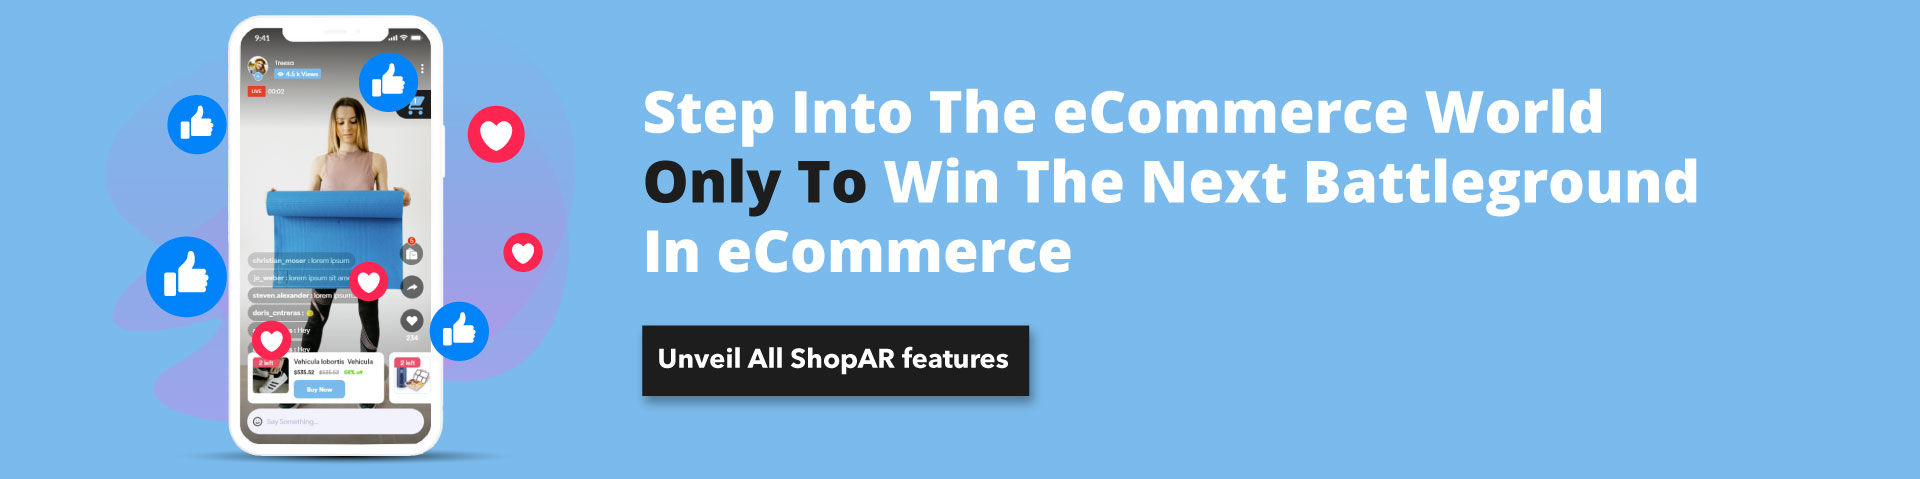 E (Livestream eCommerce) = mc² (mobile*commerce*community)